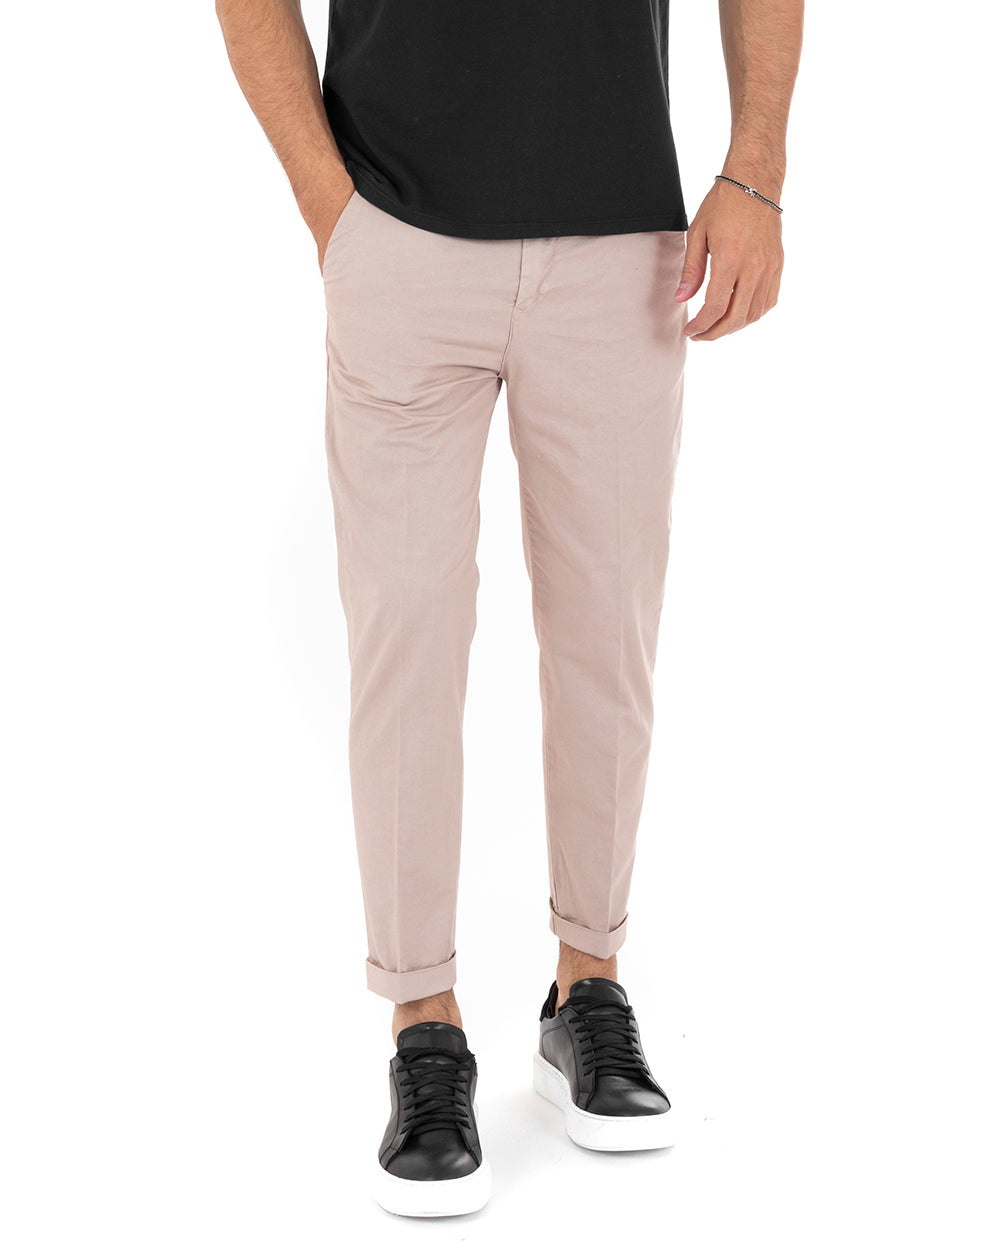 Pantaloni Uomo Cotone Tasca America Chinos Capri Sartoriale Slim Fit Casual Rosa GIOSAL-P6102A